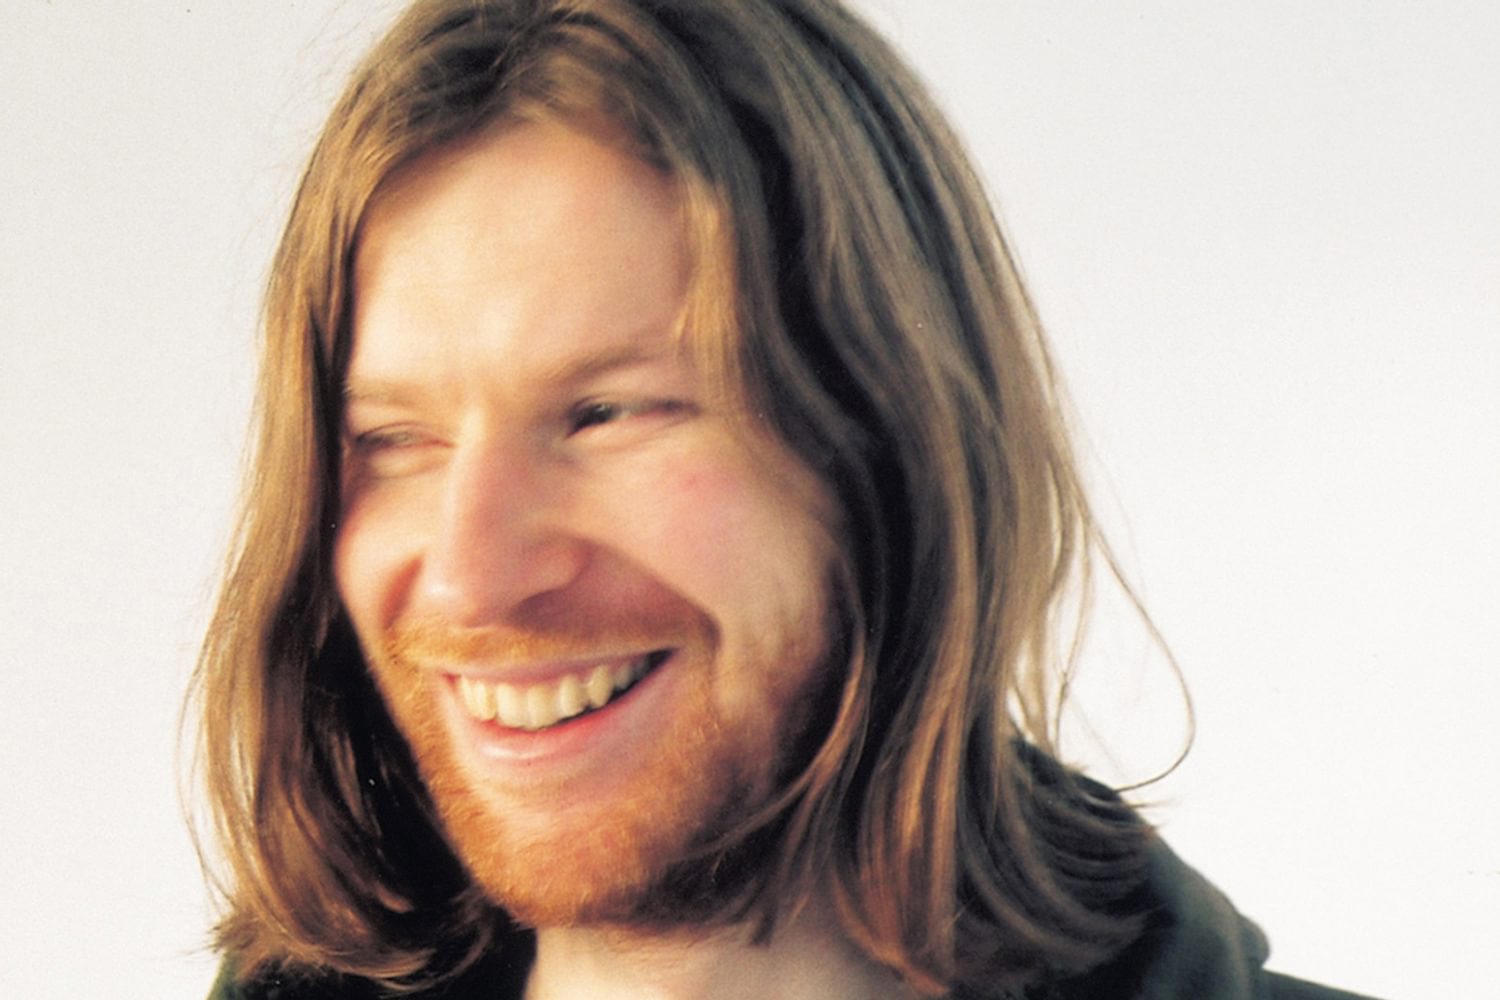 Aphex Twin and Erykah Badu are headlining Bristol’s Forwards festival